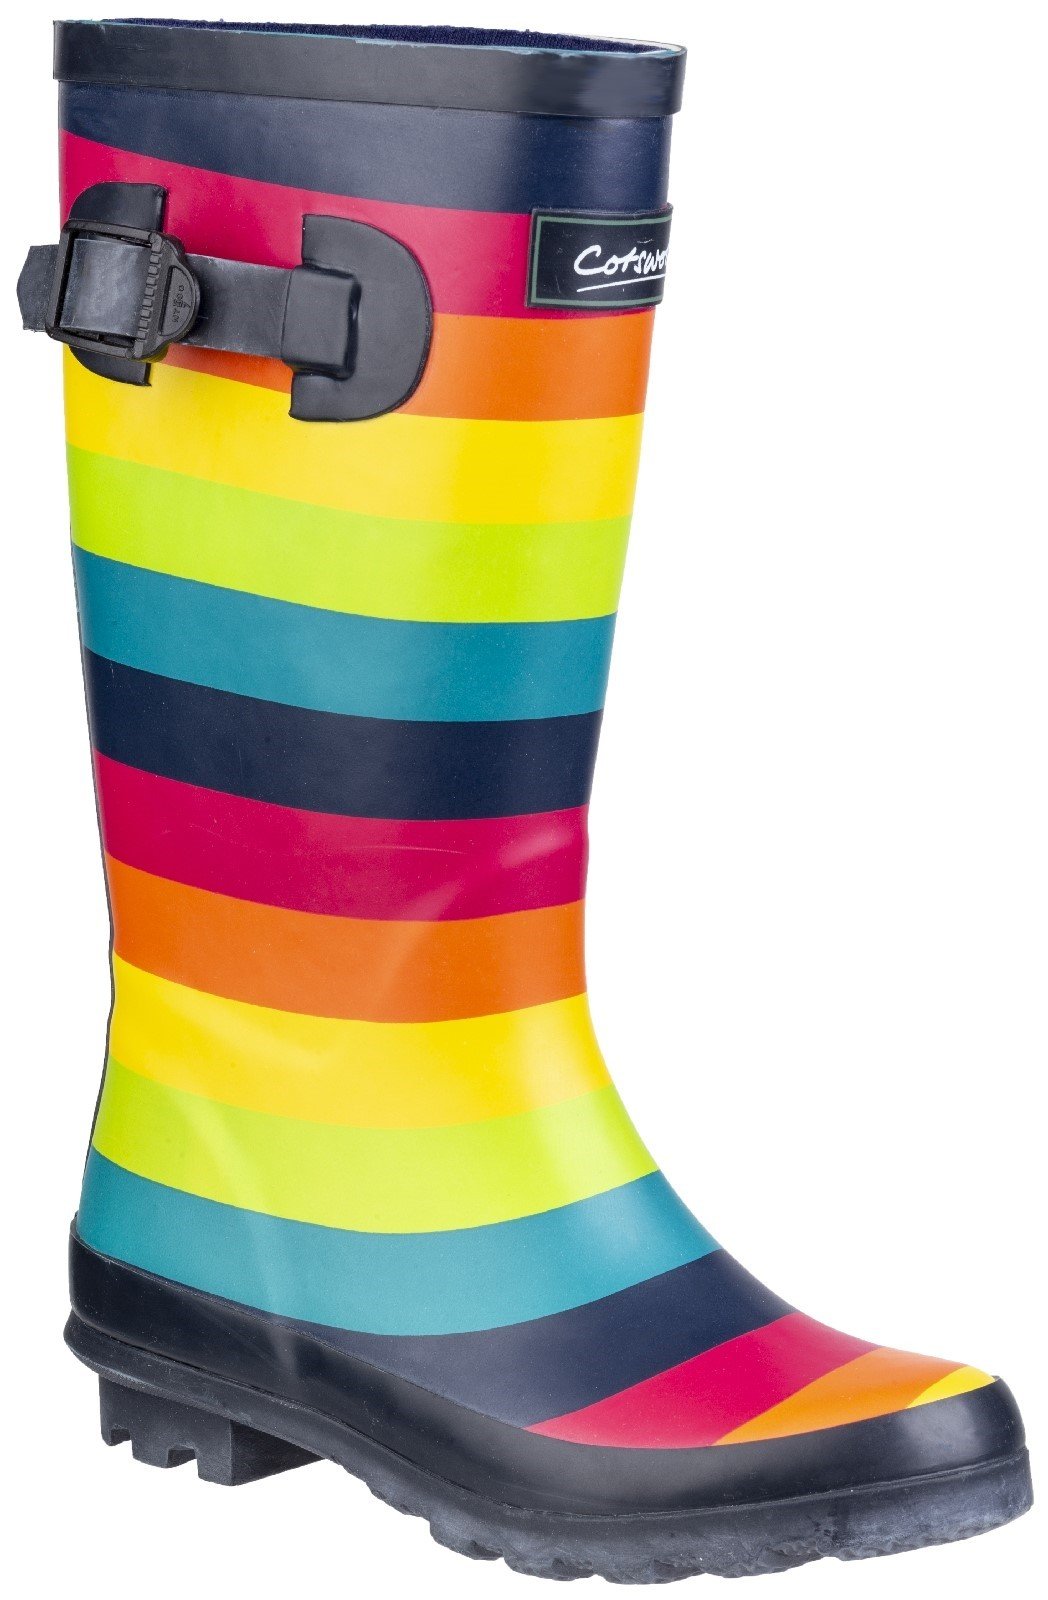 Cotswold Kid's Rainbow Wellington Boot Multicolor 27180 - Multicoloured 8